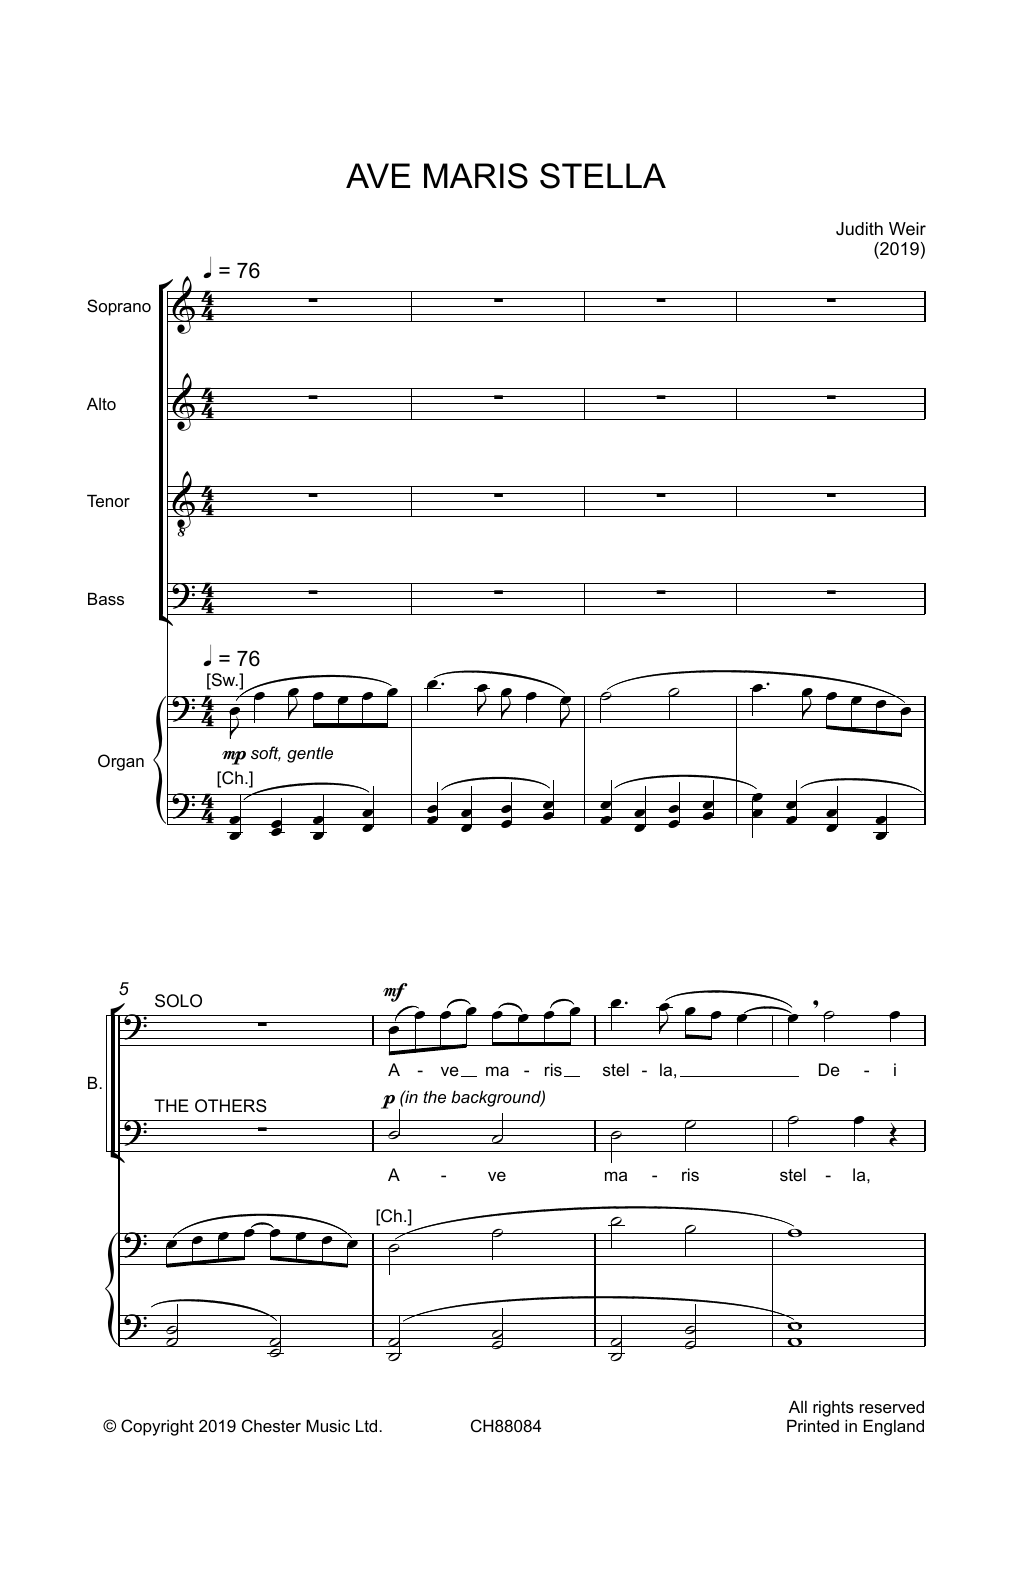 Judith Weir Ave Maris Stella Sheet Music Notes & Chords for SATB Choir - Download or Print PDF